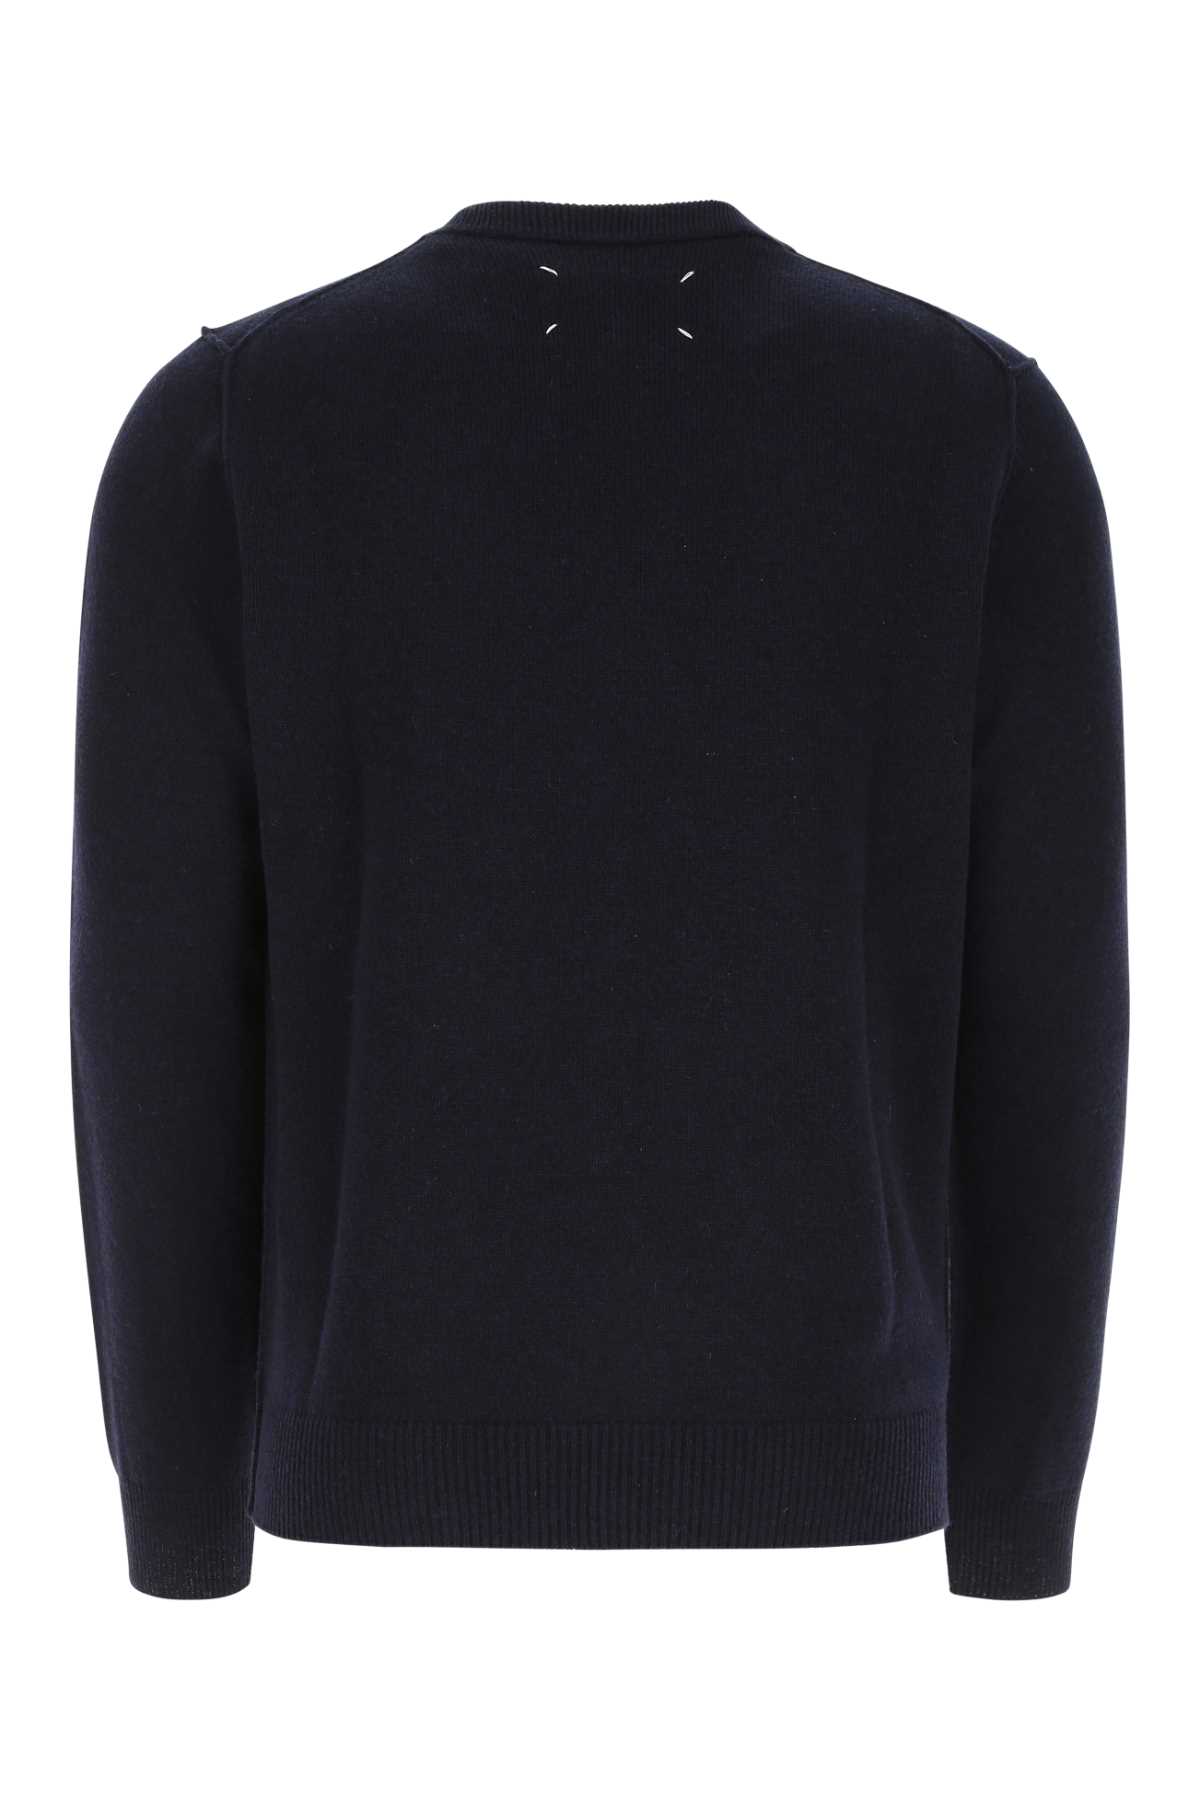 Maison Margiela Blue Cashmere Sweater In 511